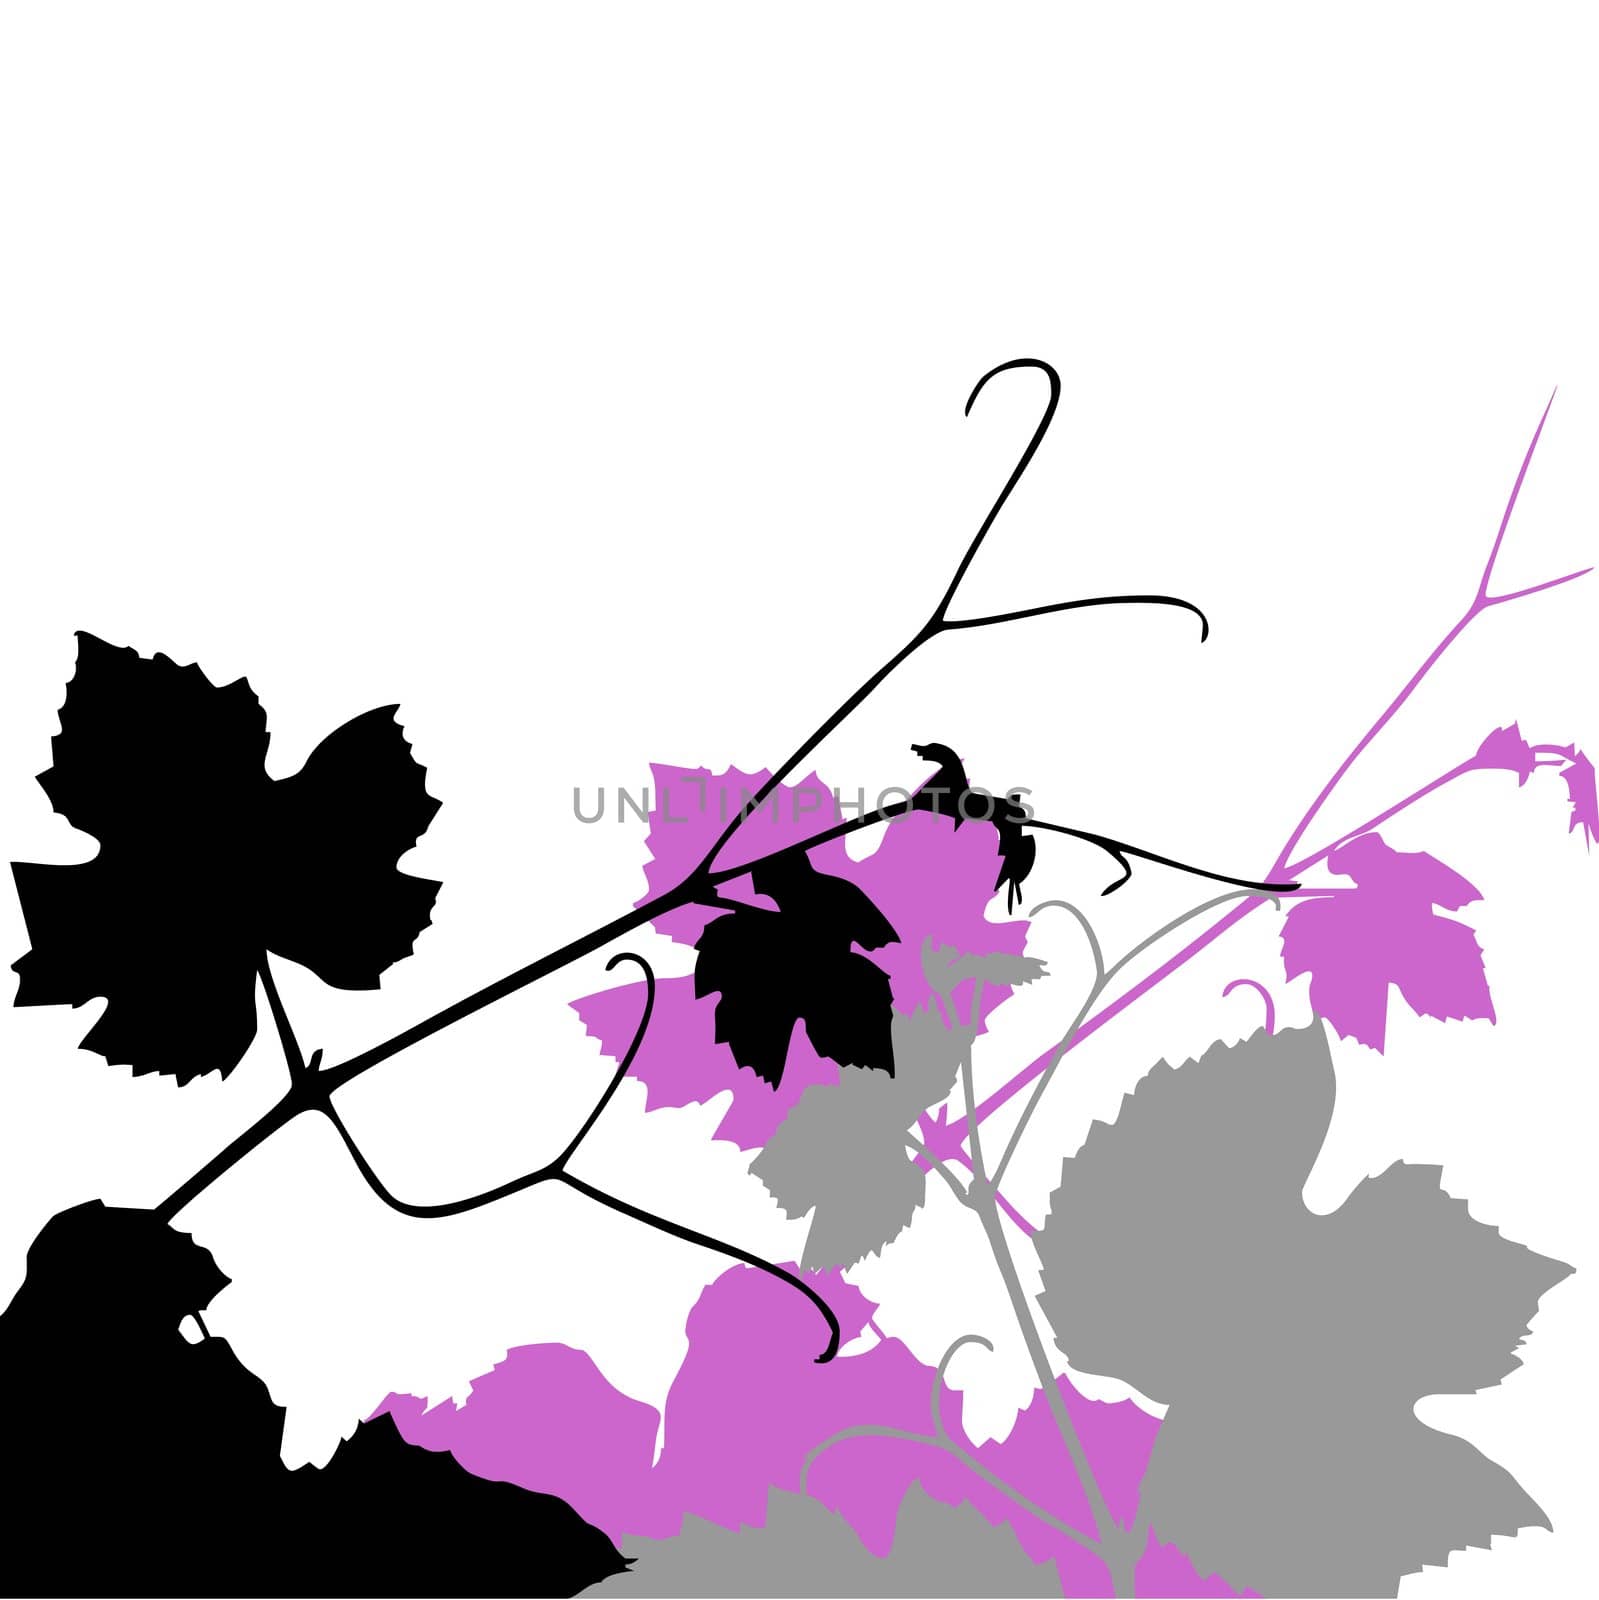 Vine leaves swirls illustration over a white background